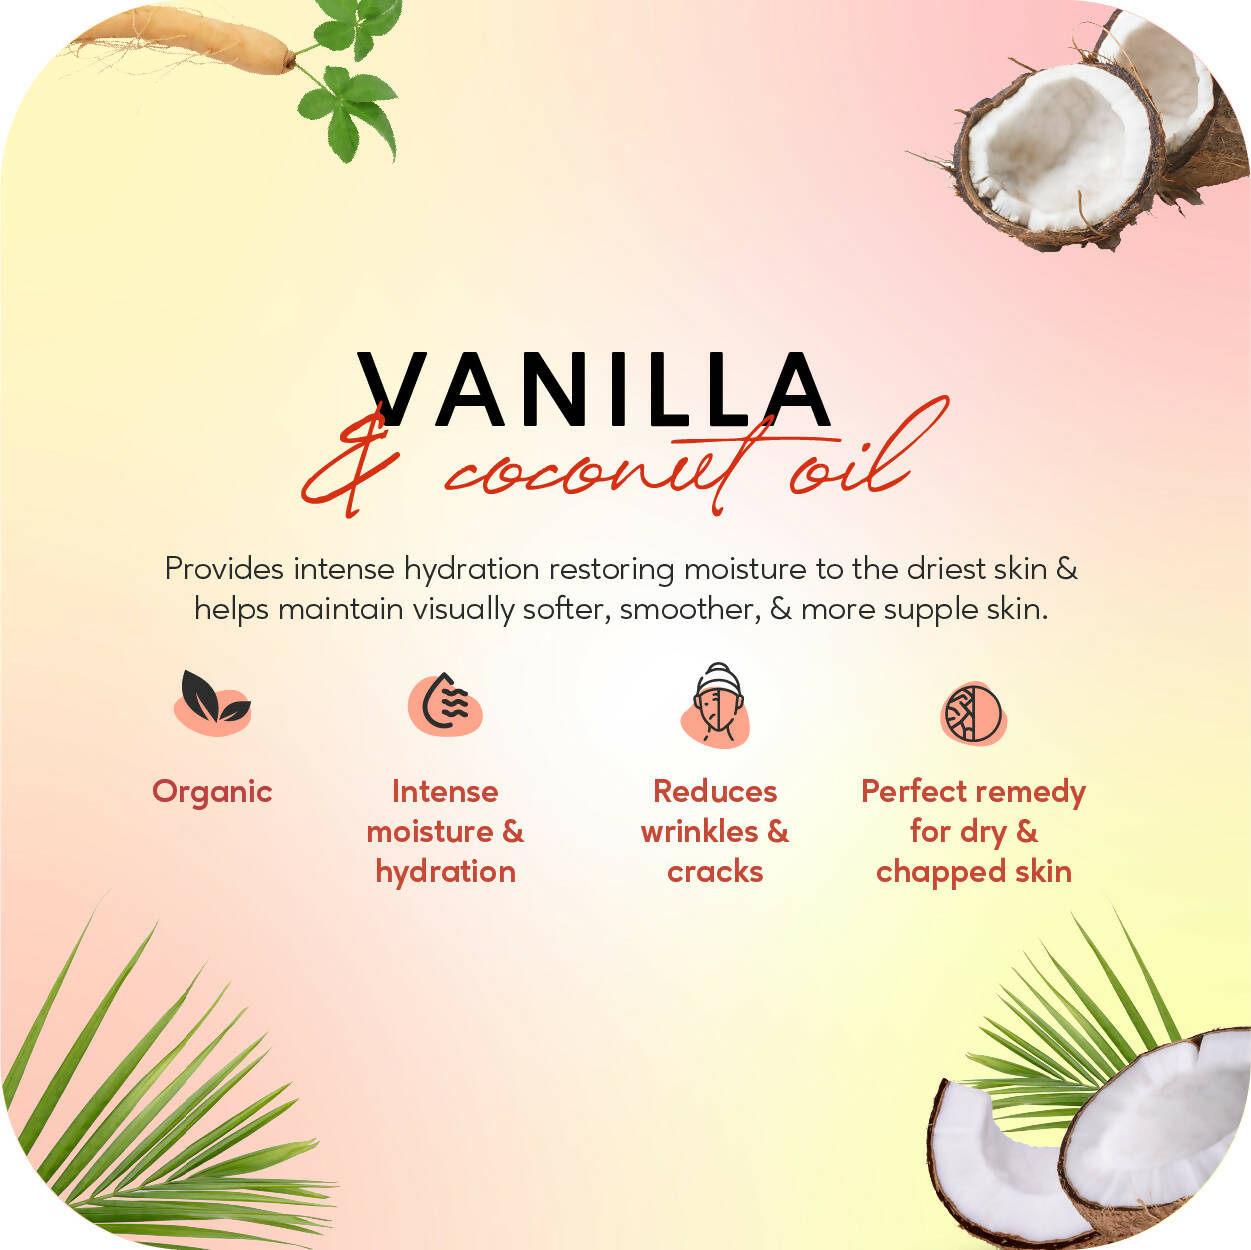 Careberry Organic Vanilla & Extra Virgin Coconut Oil Ultra Moisture Fast-Absorbing Body Lotion For Intense Hydration - Distacart